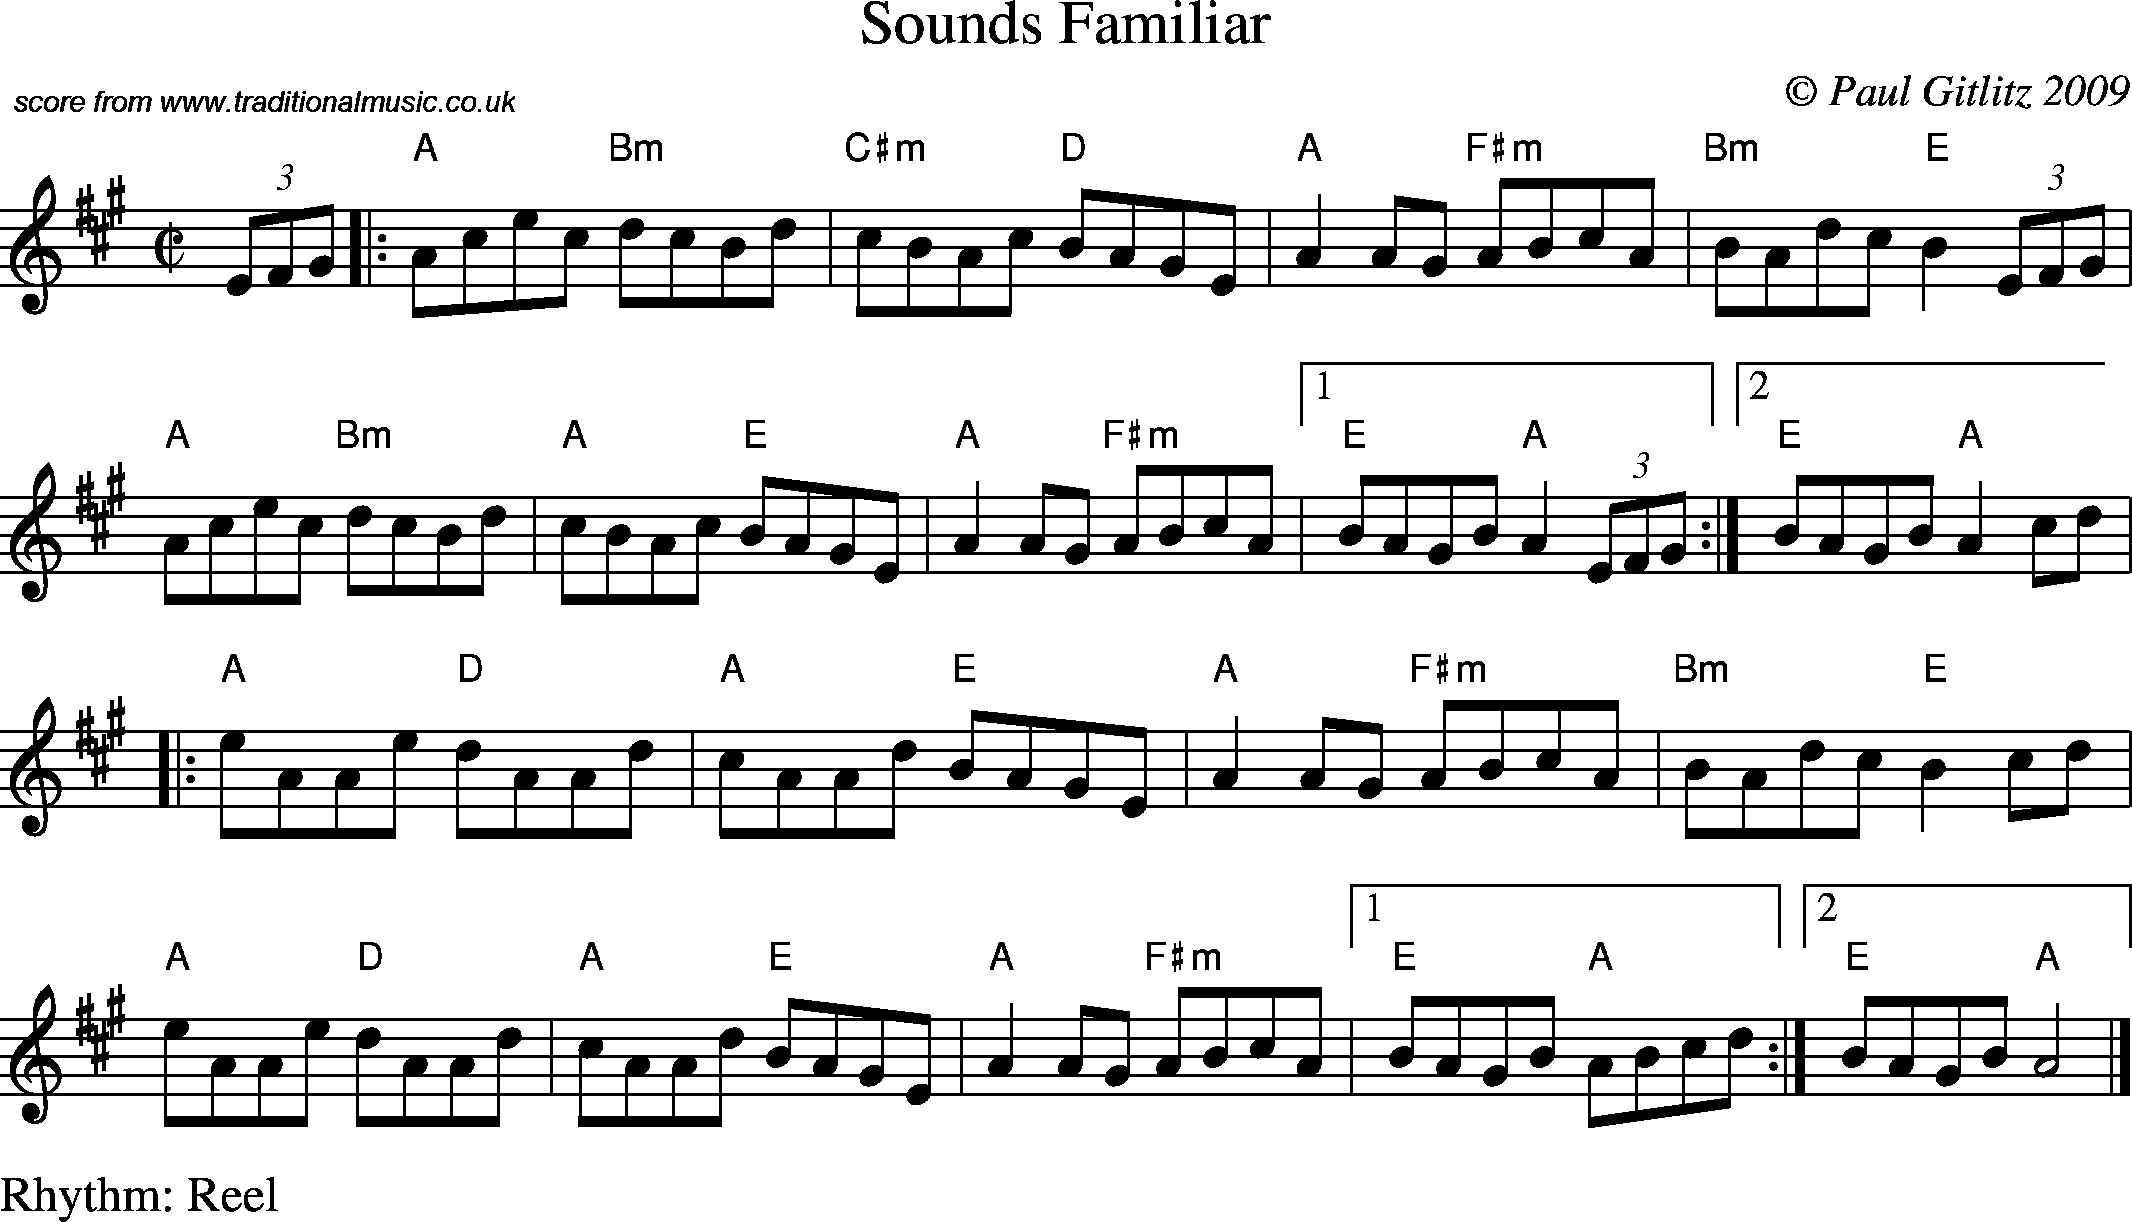 Sheet Music Score for Reel - Sounds Familiar